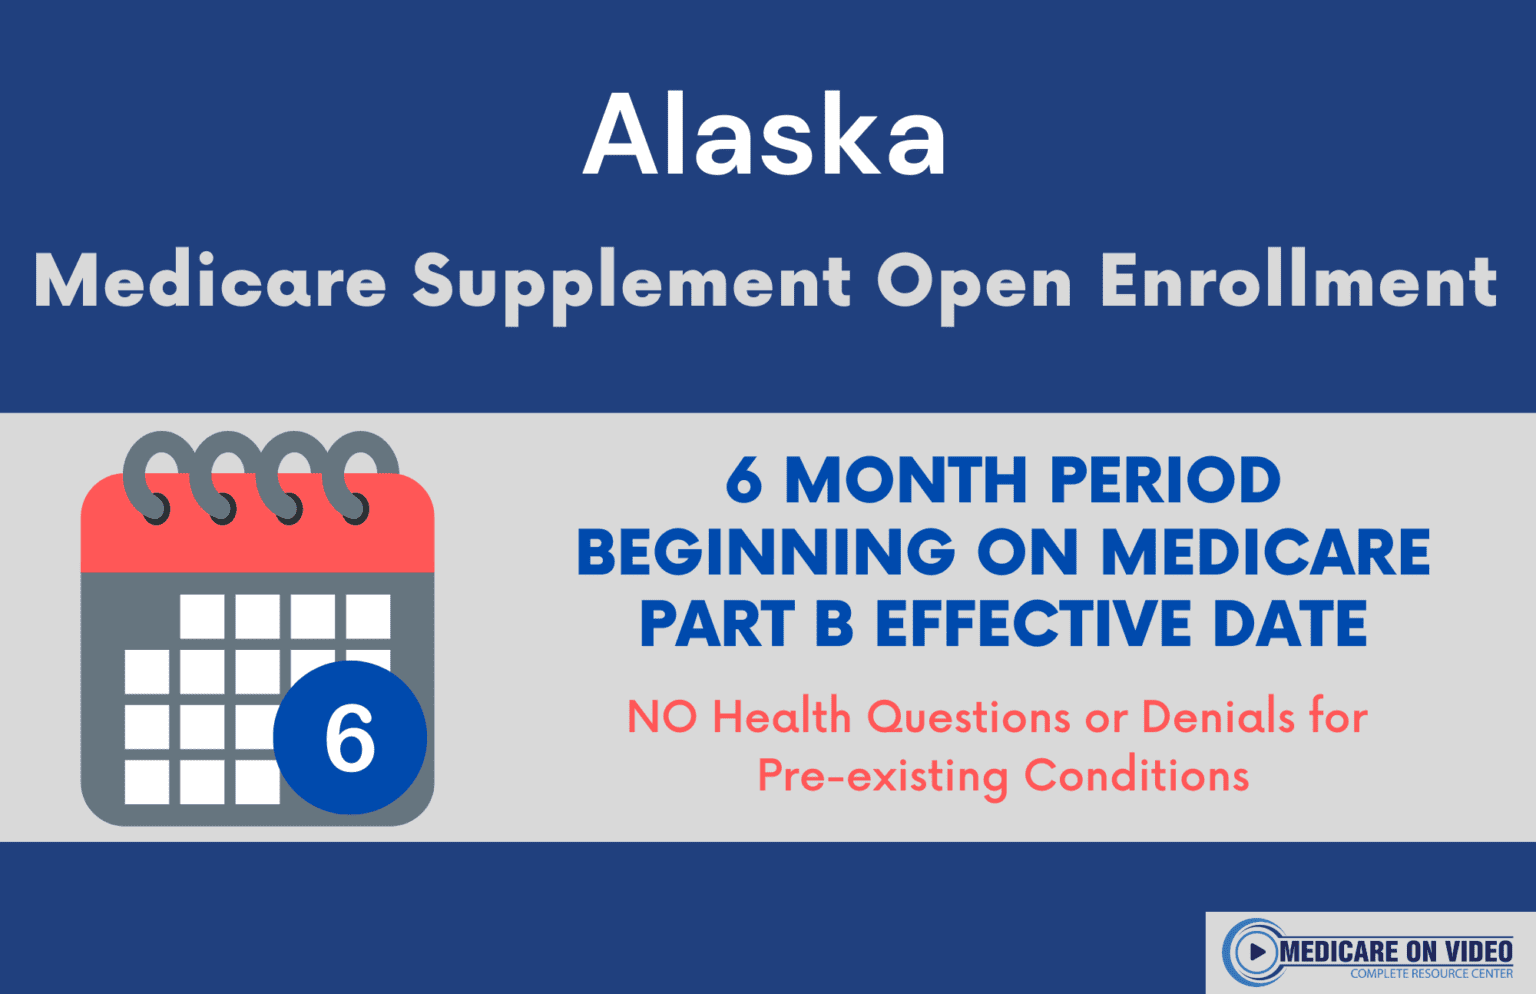 Alaska Medicare Plans Check Medicare Insurance Options in AK